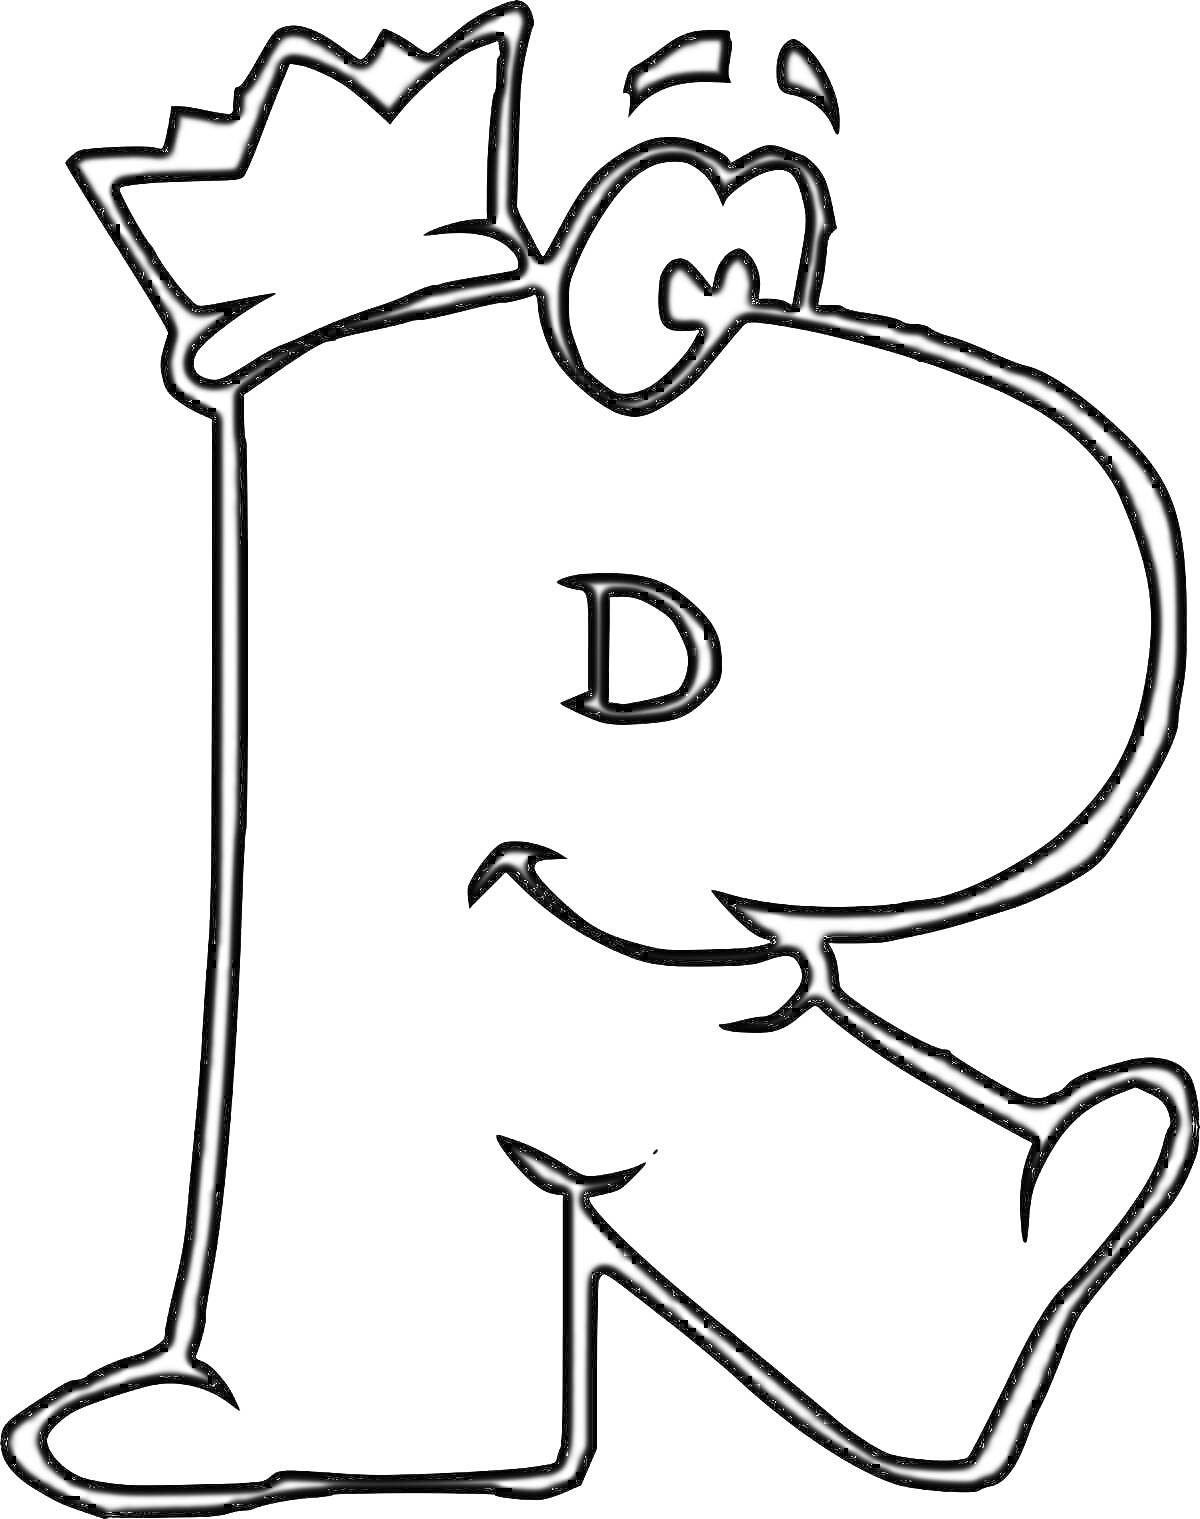 На раскраске изображено: Буква R, Алфавит, Шапка, Глаза, Брови, Улыбка, Нога